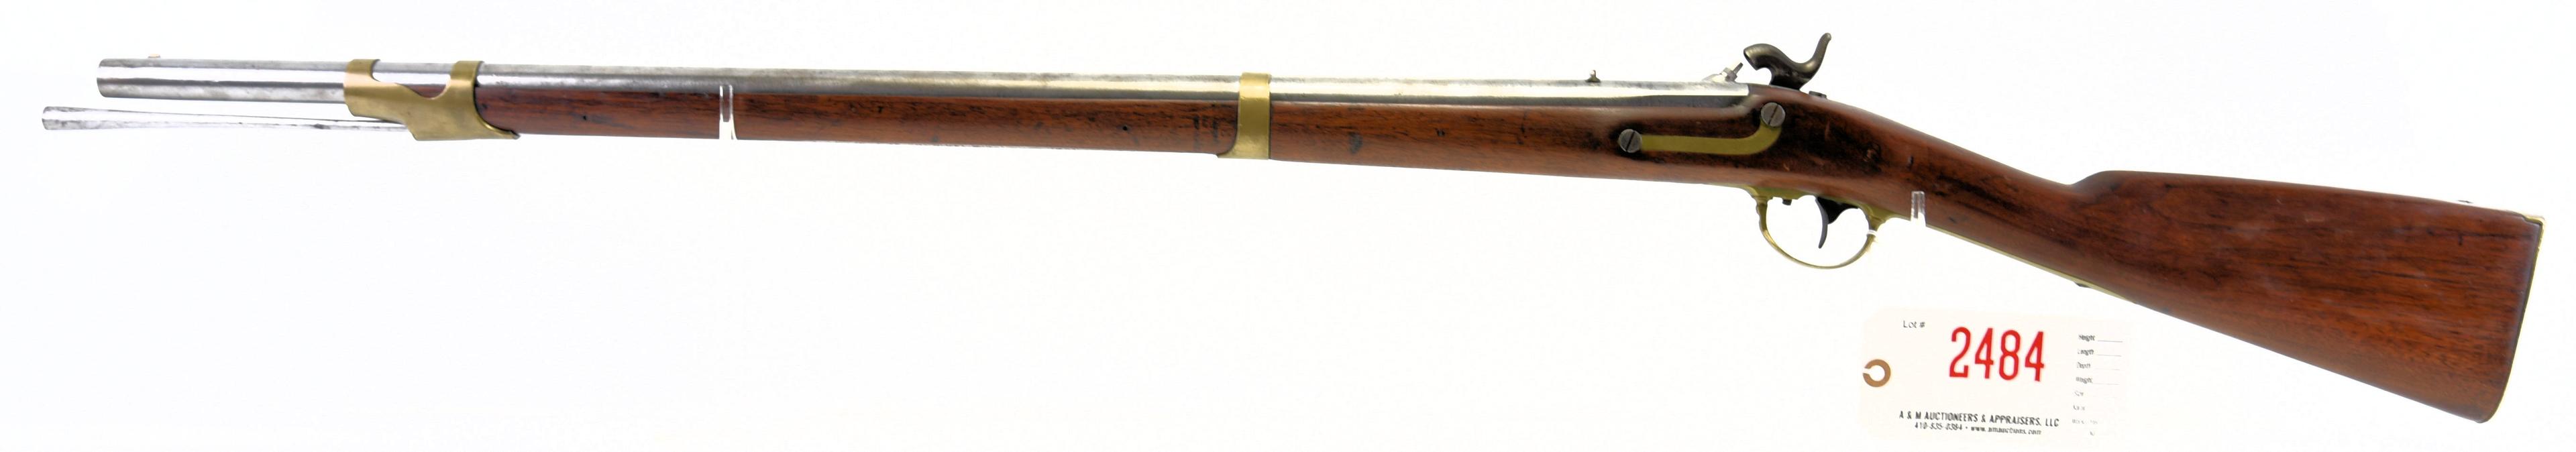 U.S. Robbins & Lawrence Mdl 1841 Percussion Rifle Black Powder Musket .54 Cal BLACKPOWDER